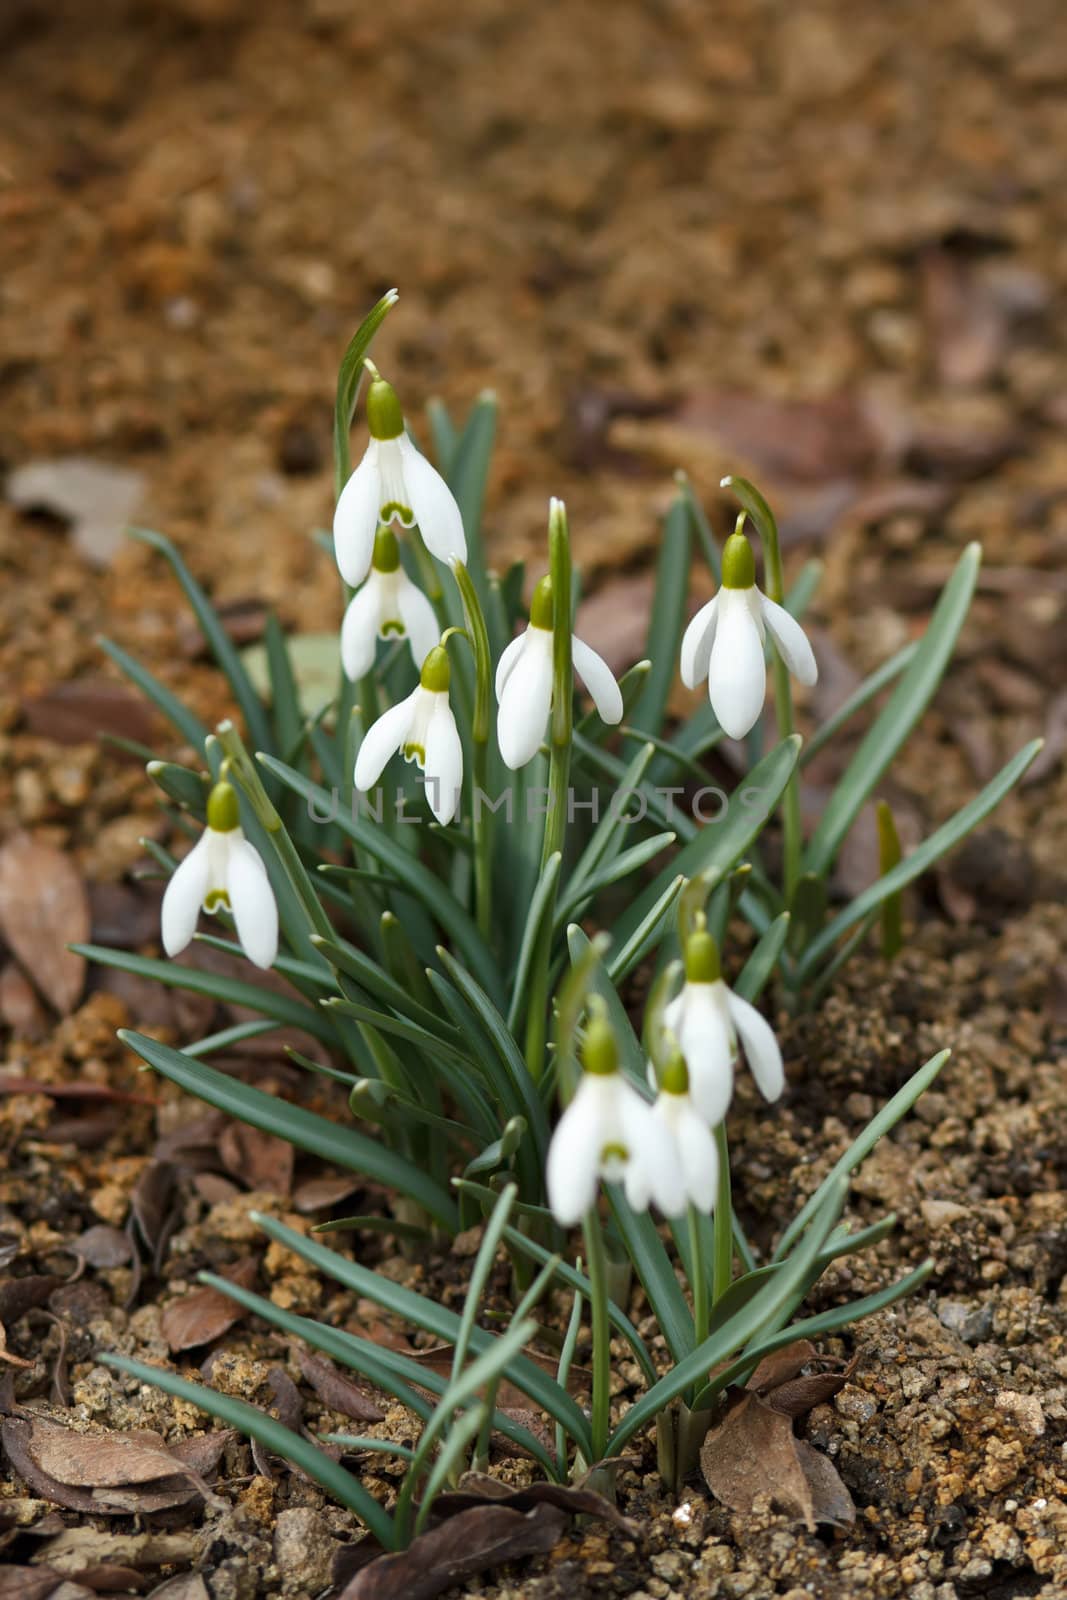 Snowdrop bloom in springtime by artush